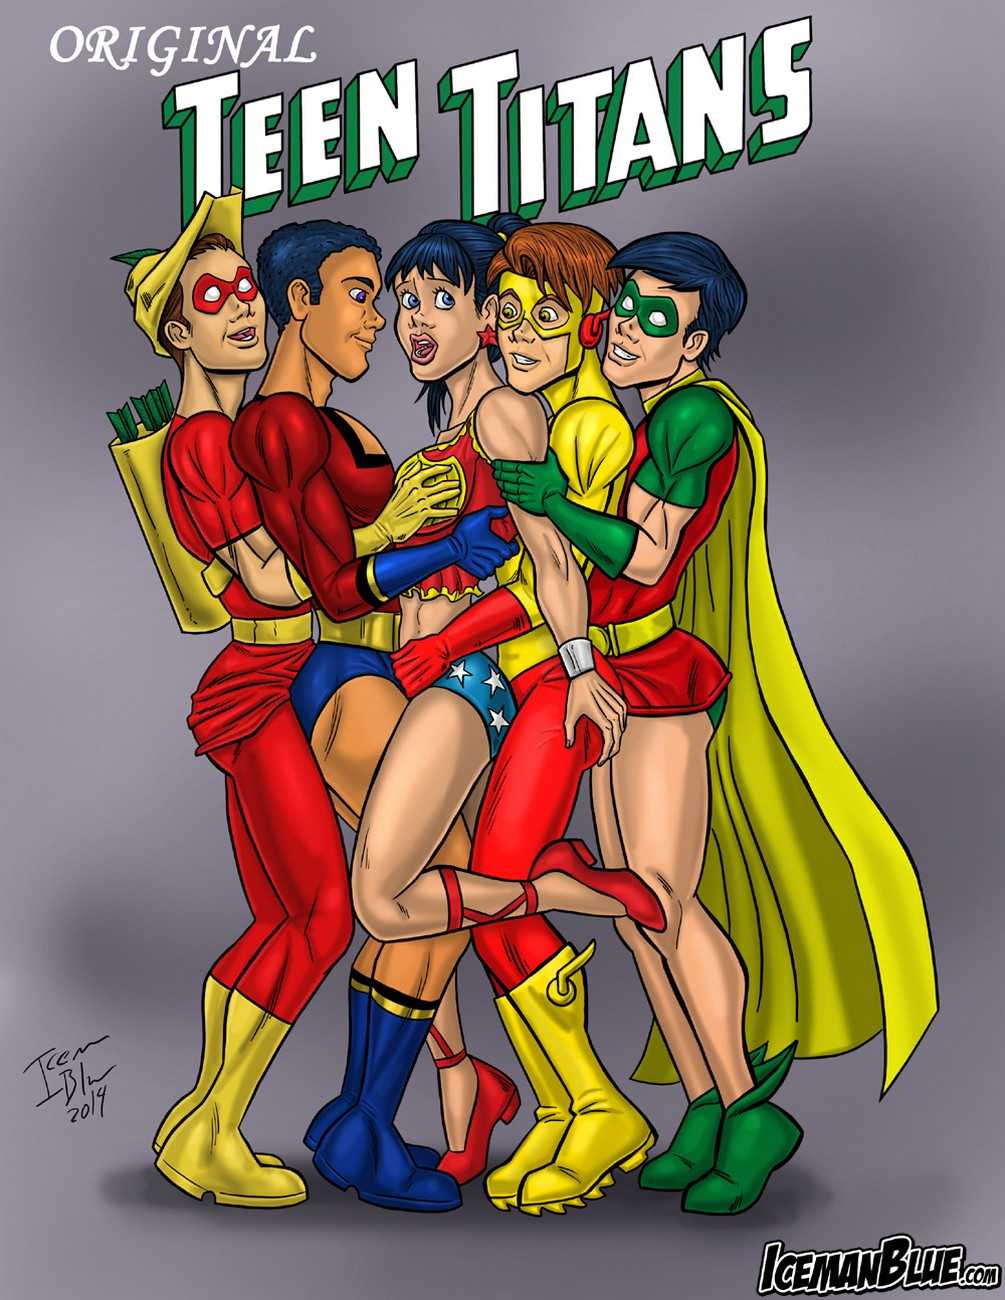 Original Teen Titans page 1